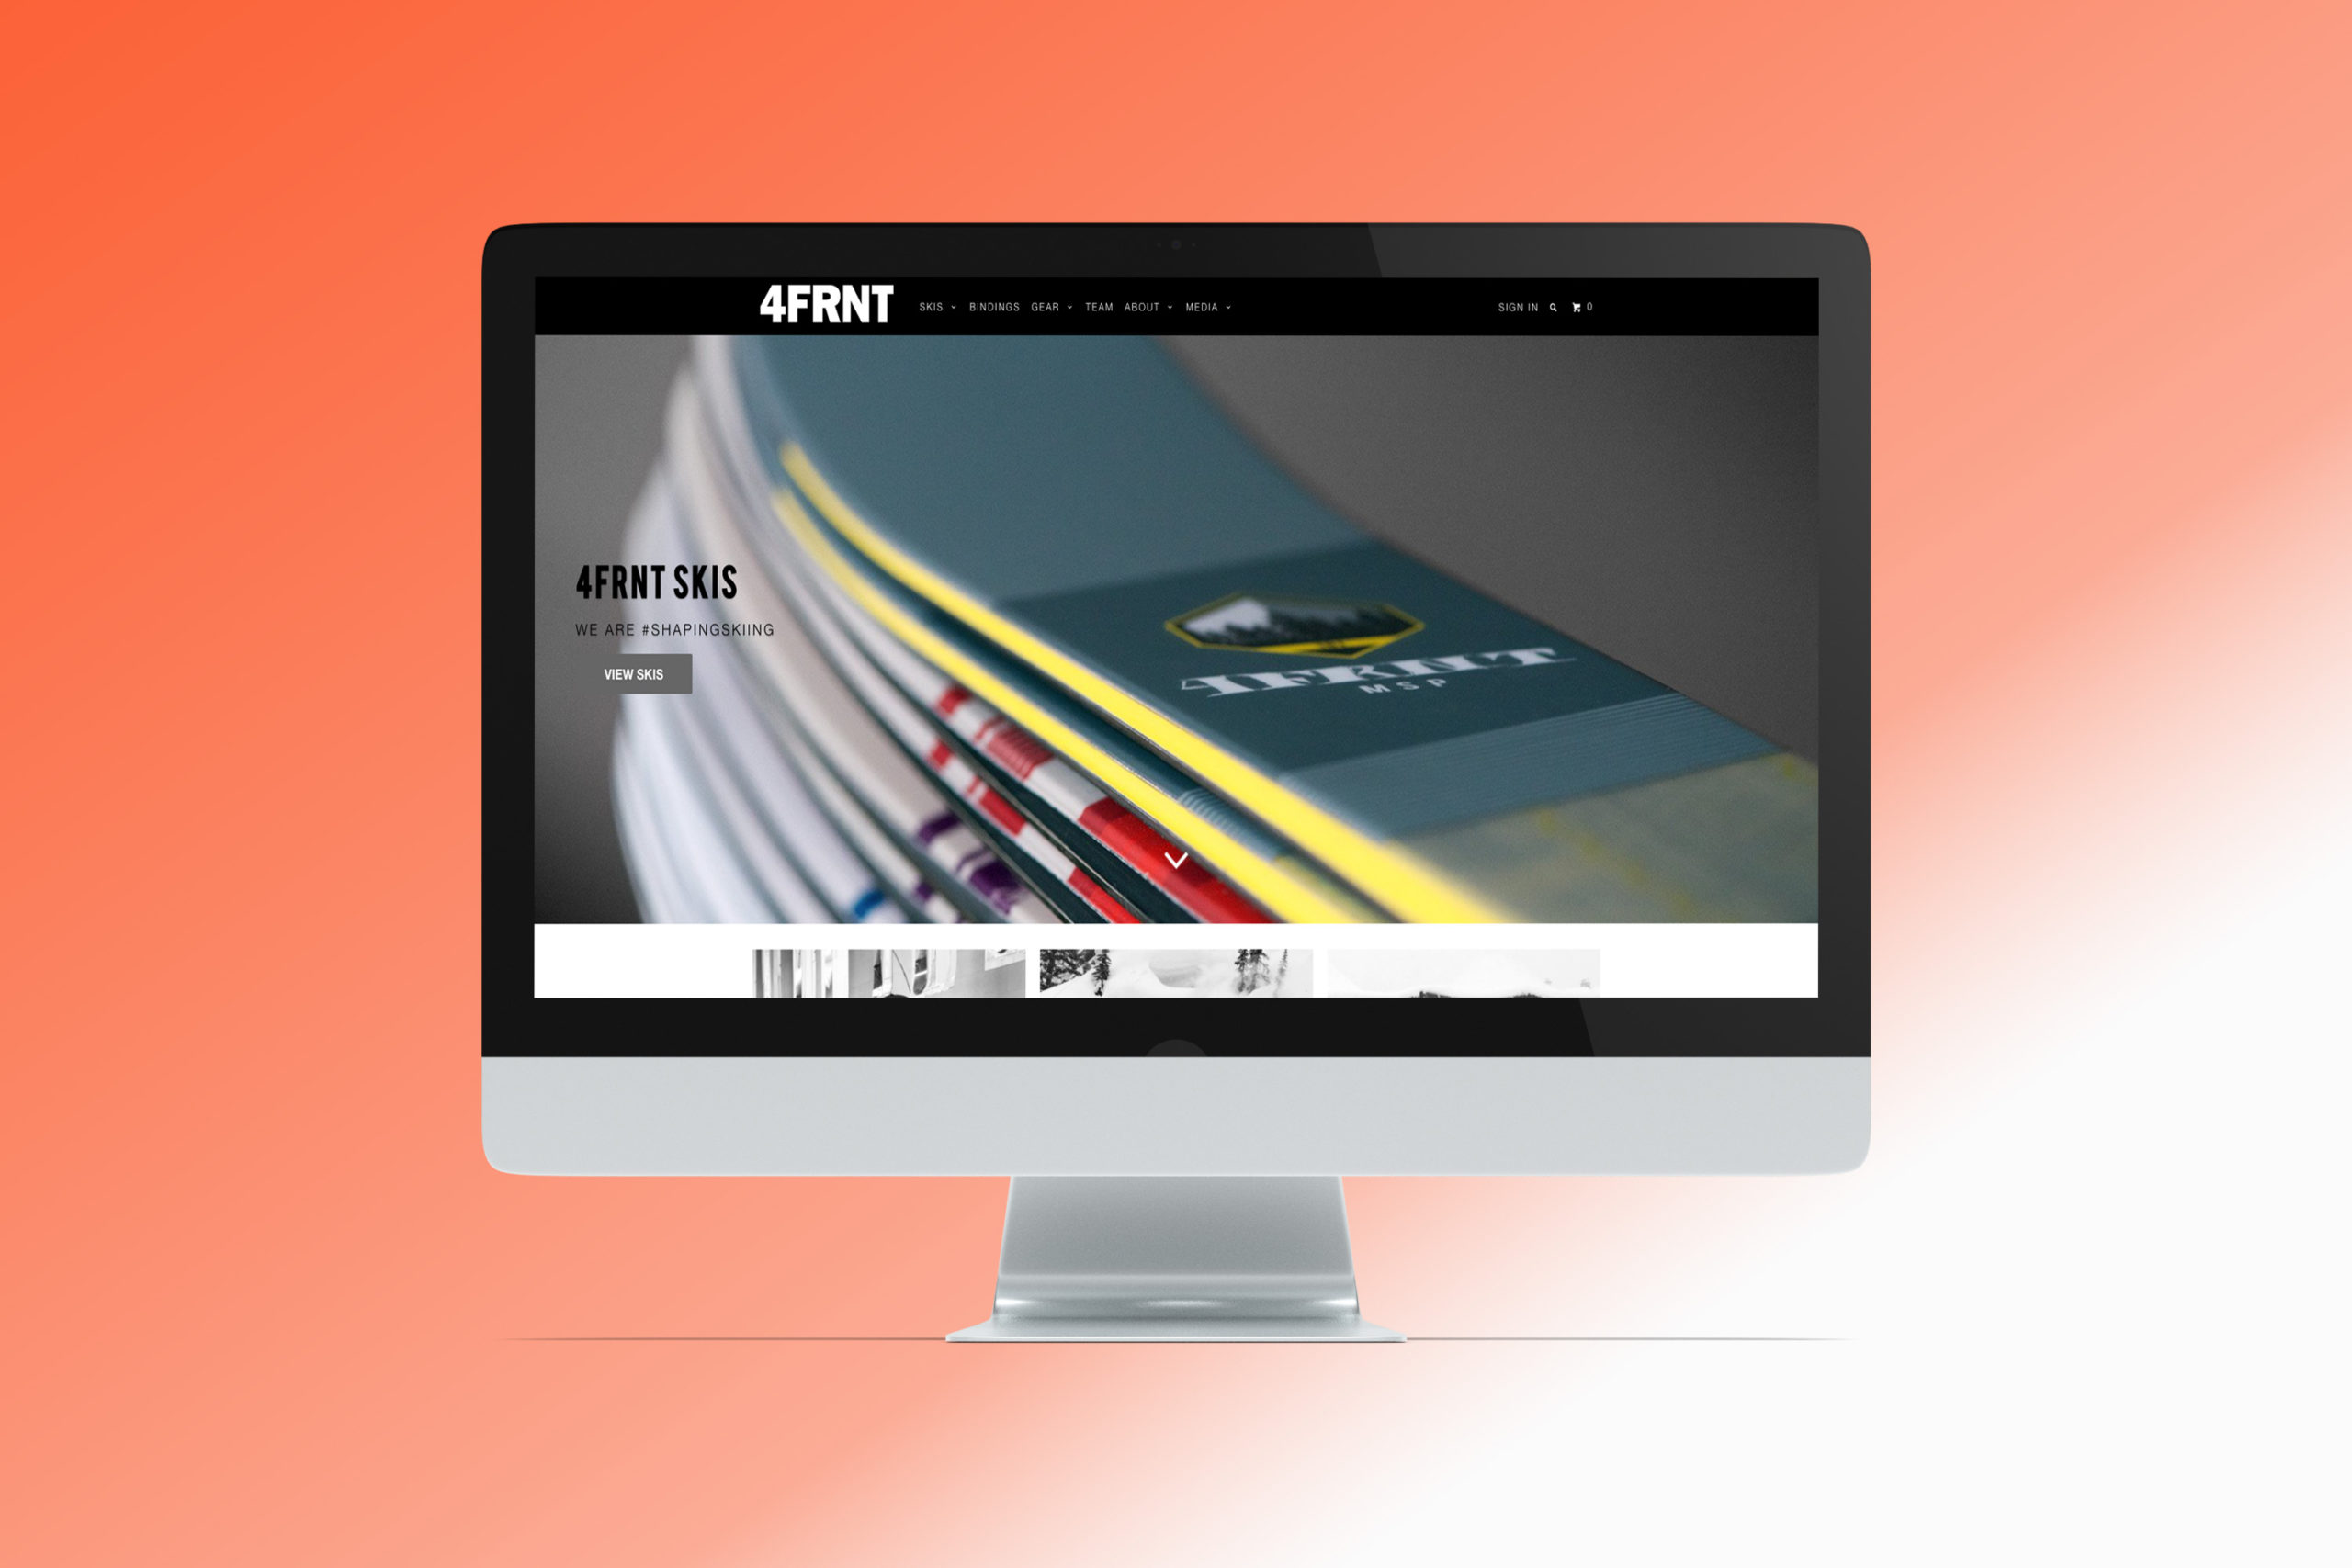 4FRNT homepage before redesign on a desktop